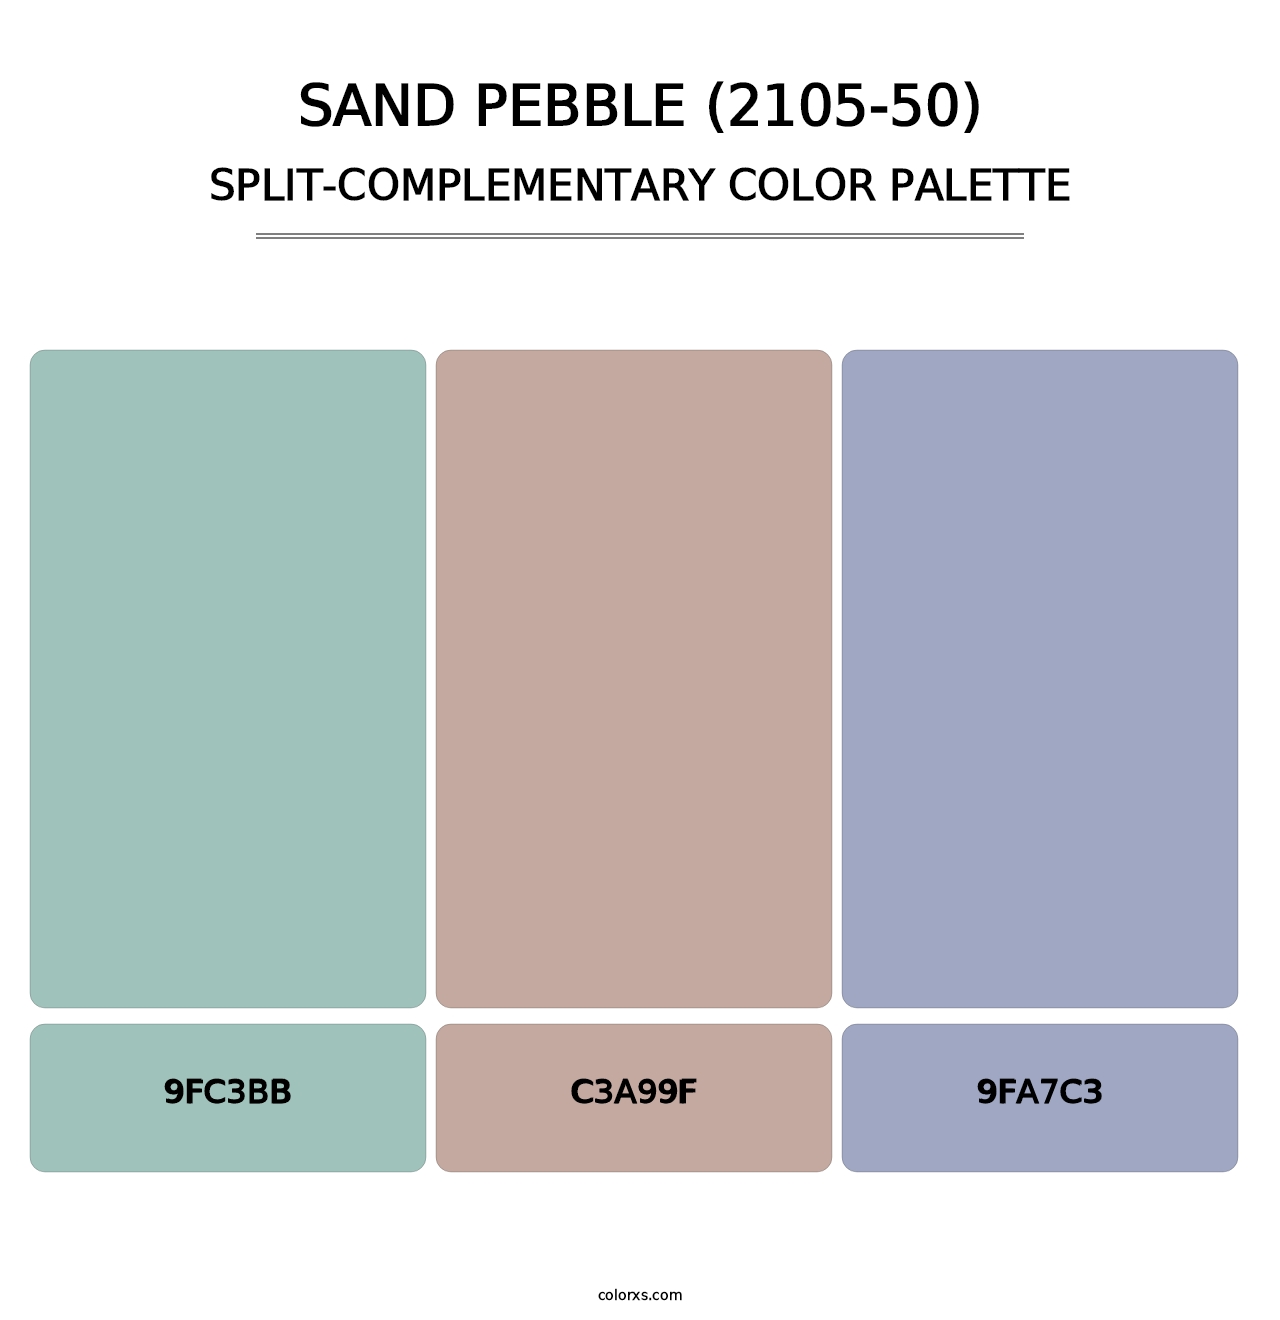 Sand Pebble (2105-50) - Split-Complementary Color Palette